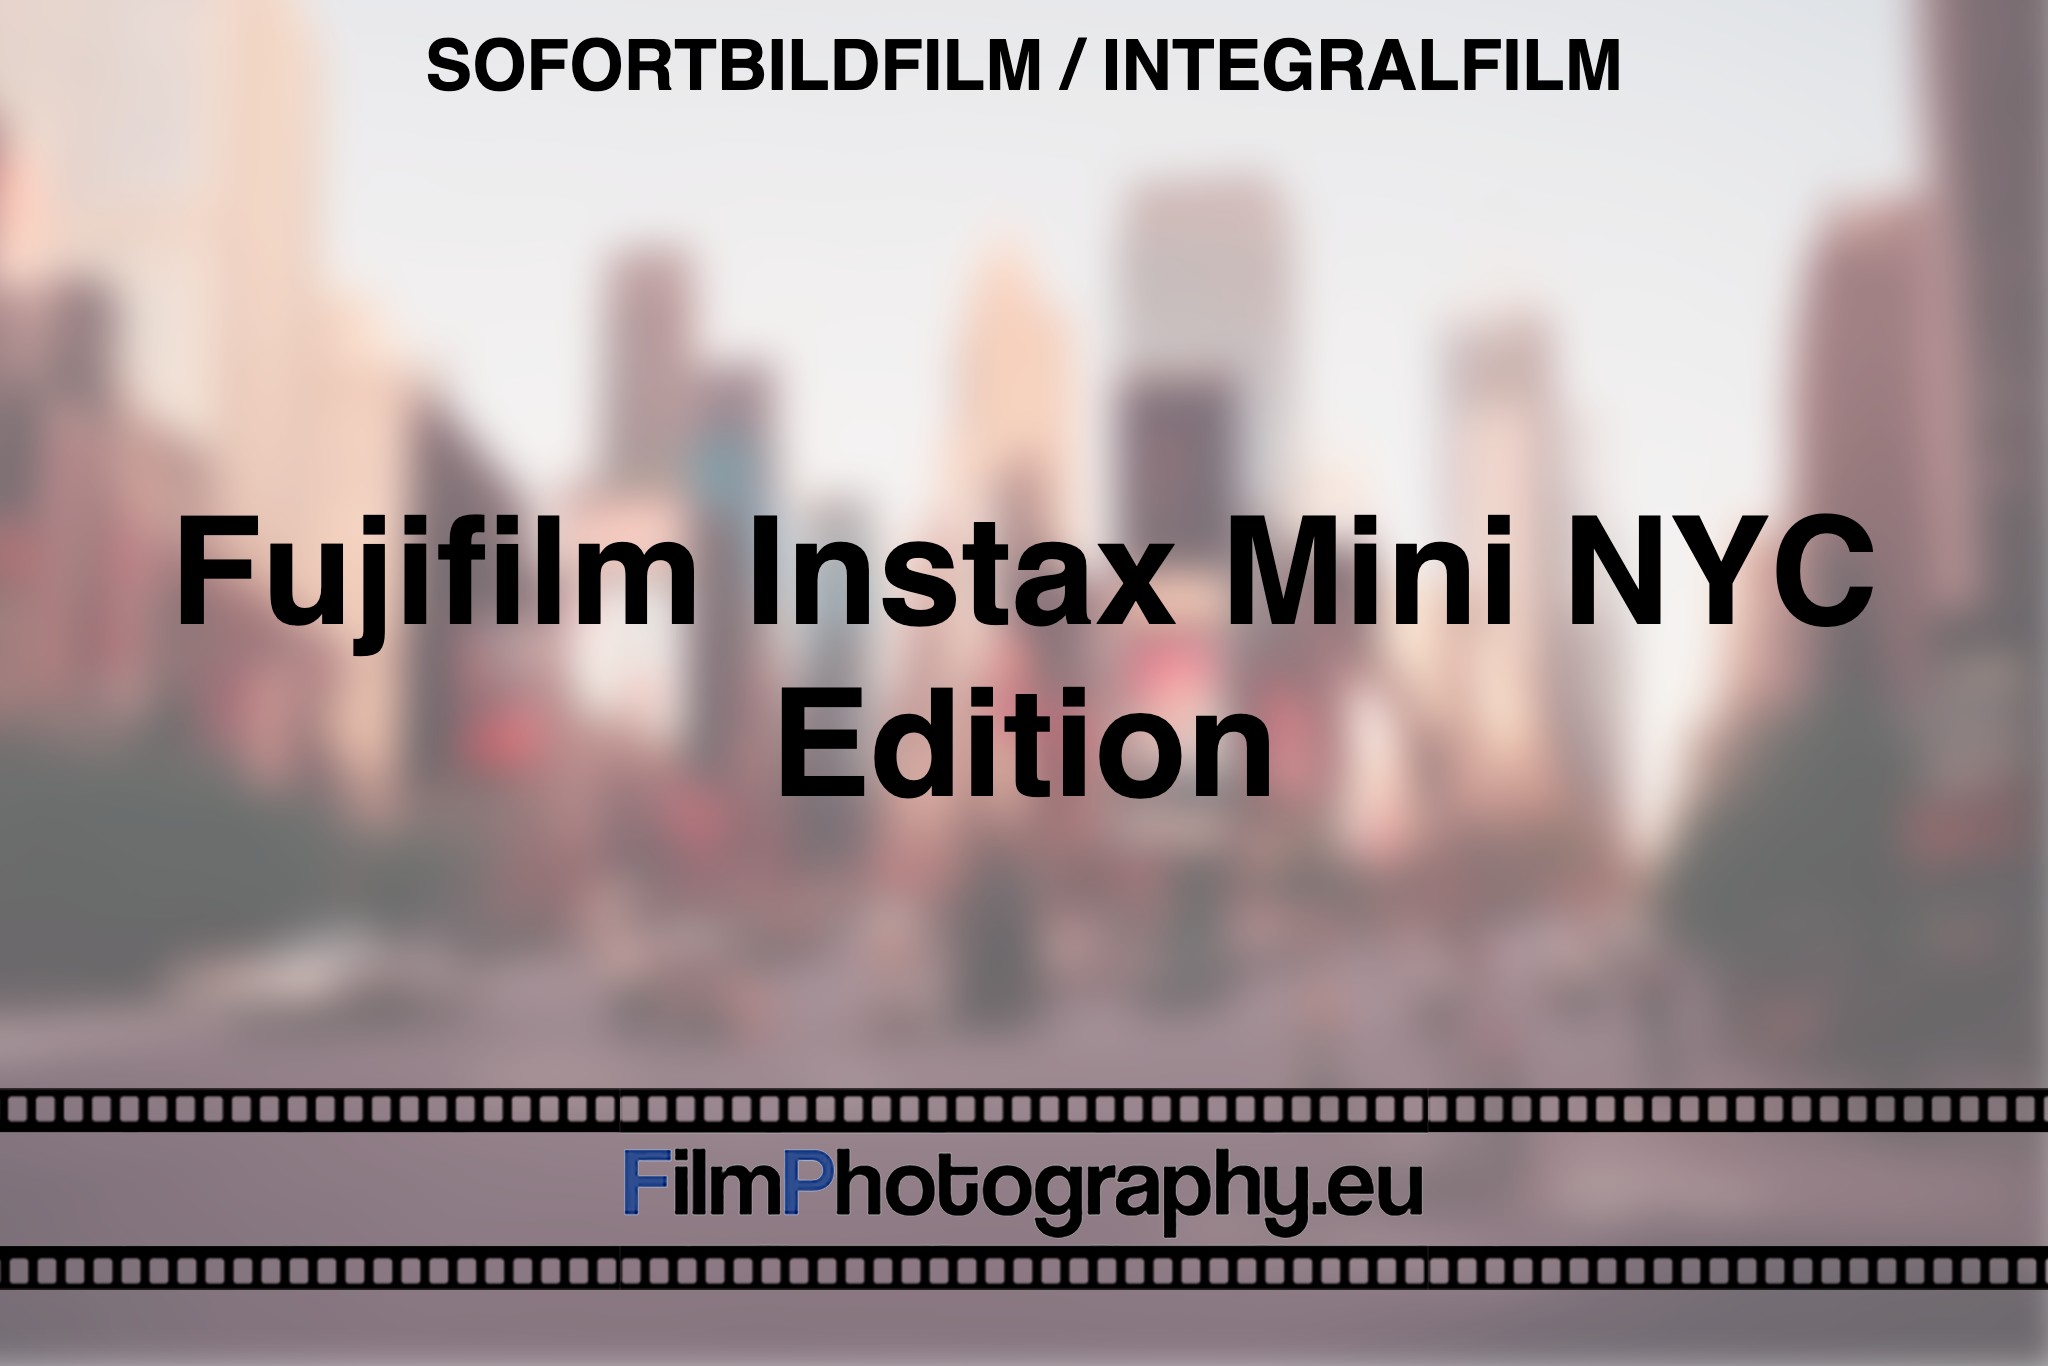 fujifilm-instax-mini-nyc-edition-sofortbildfilm-integralfilm-fp-bnv